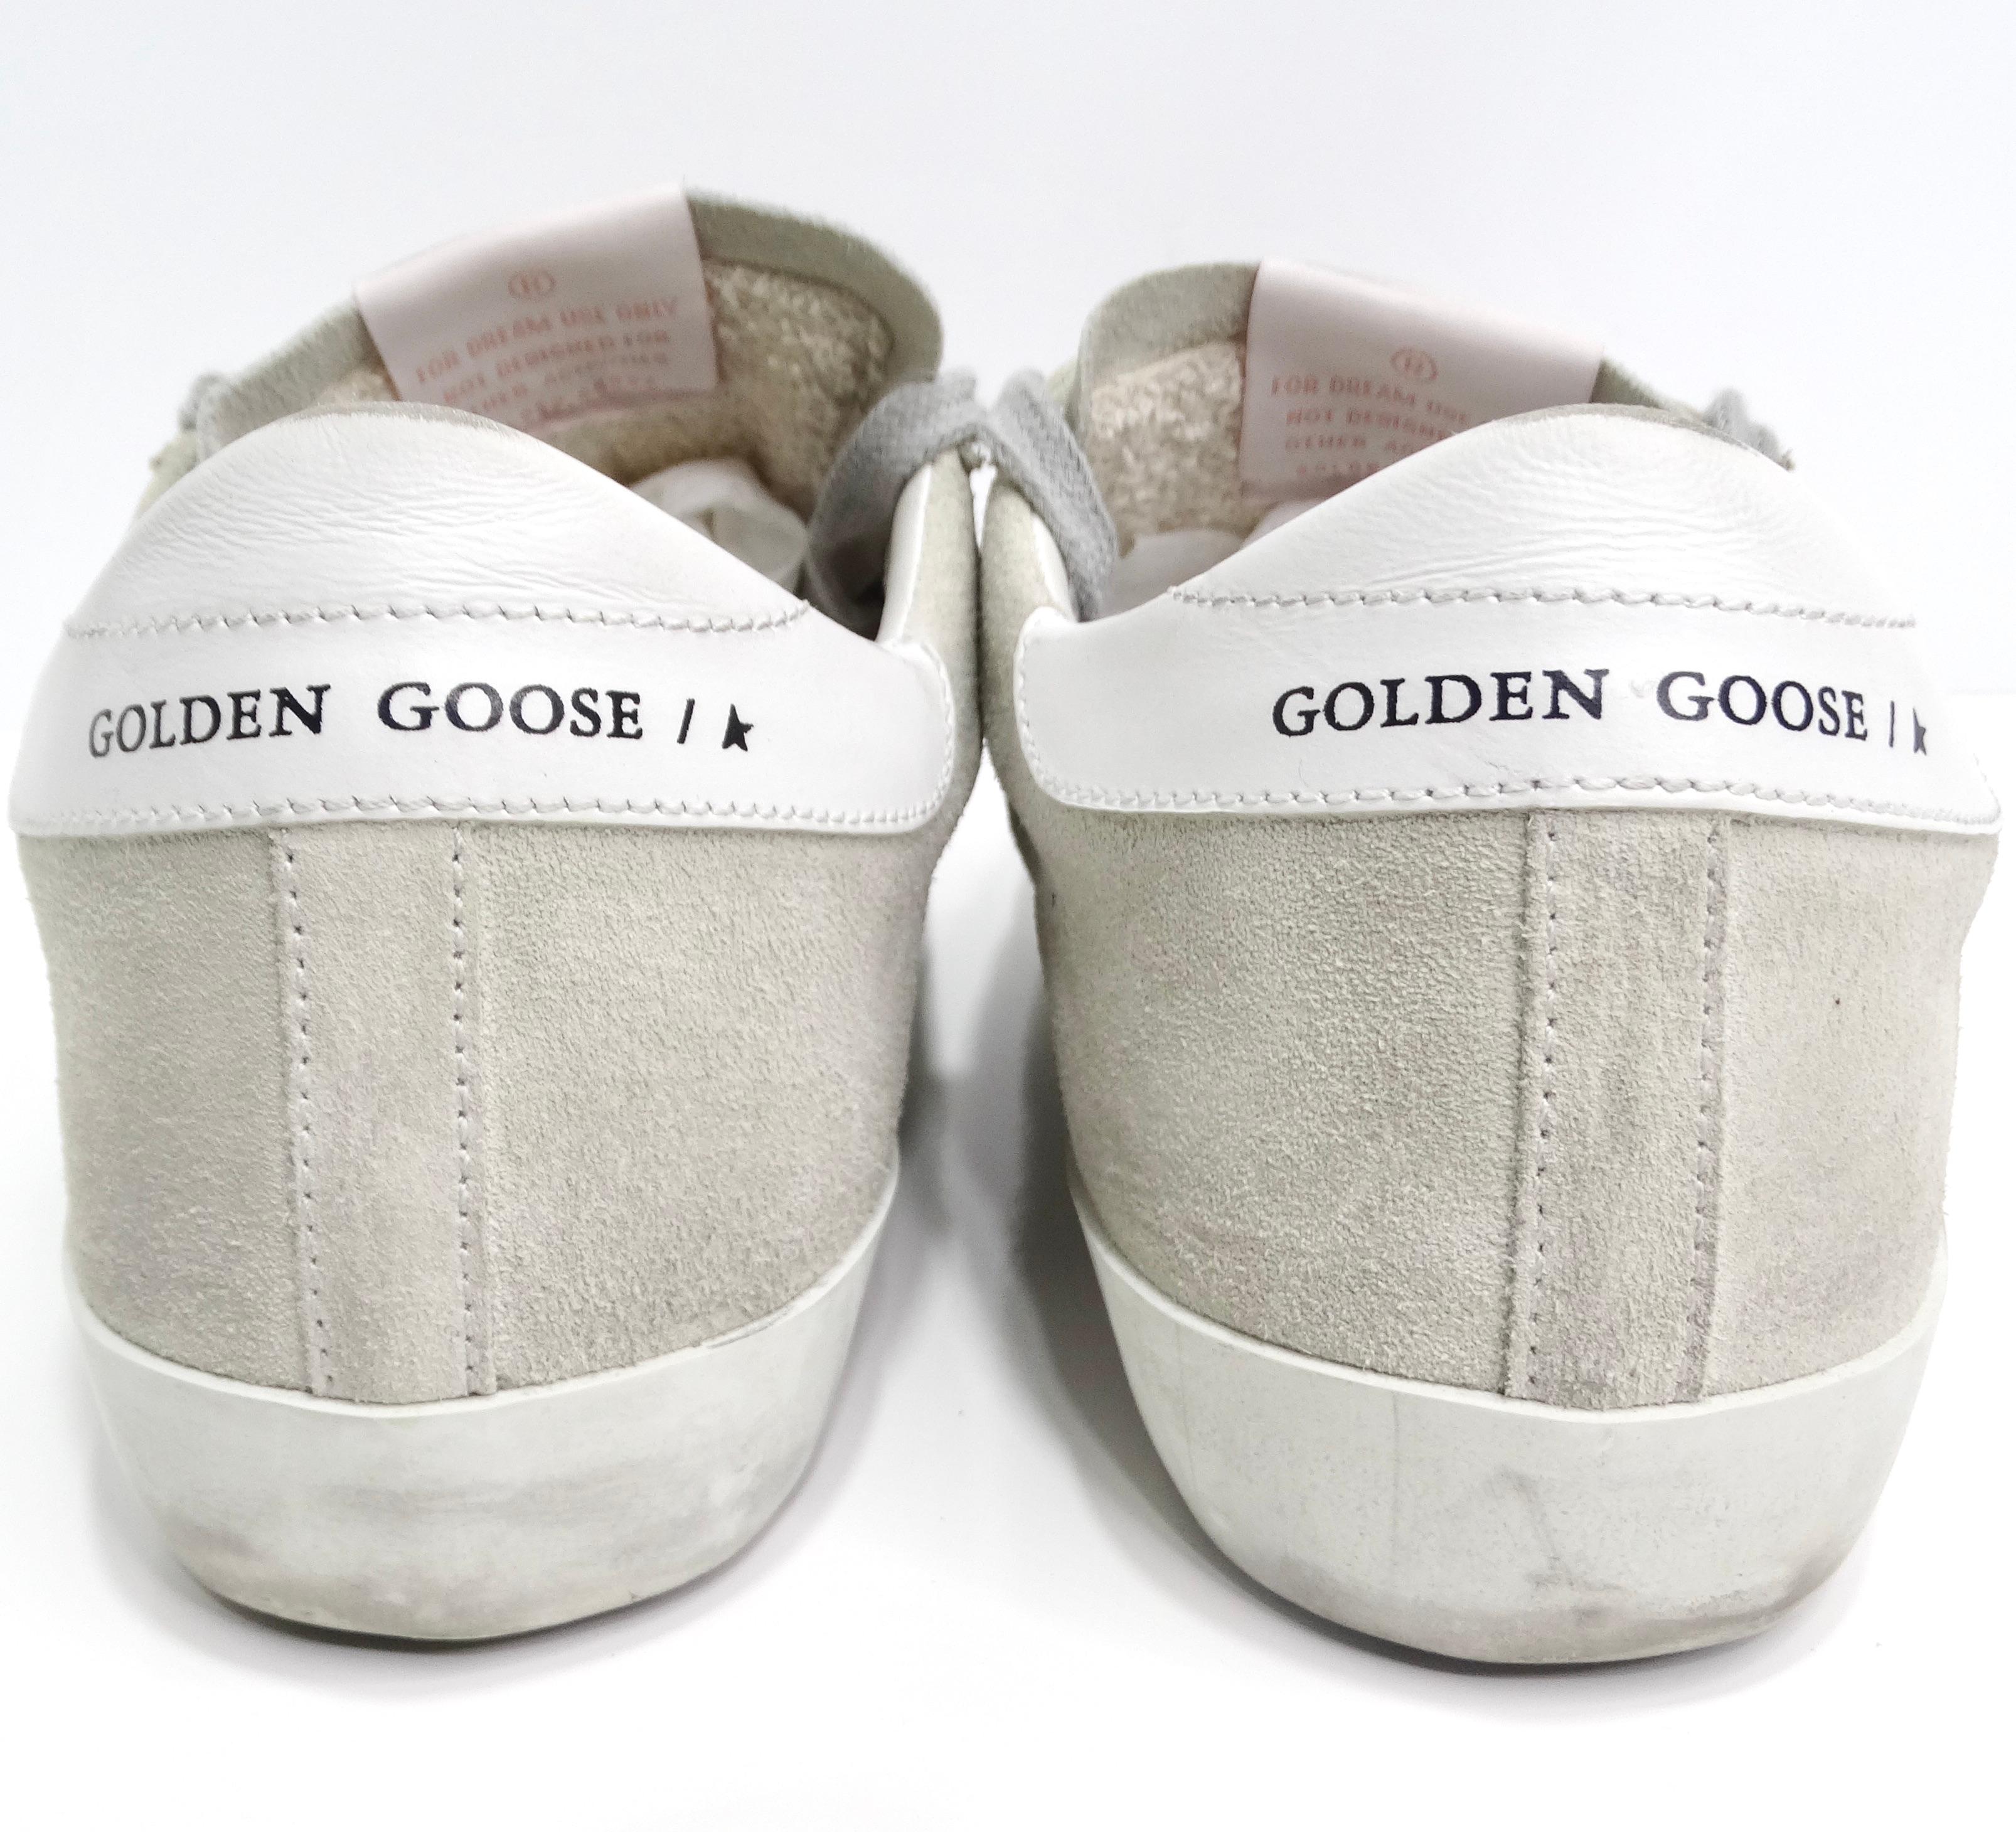  Golden Goose Superstar Swarovski Crystal Suede Sneakers 3